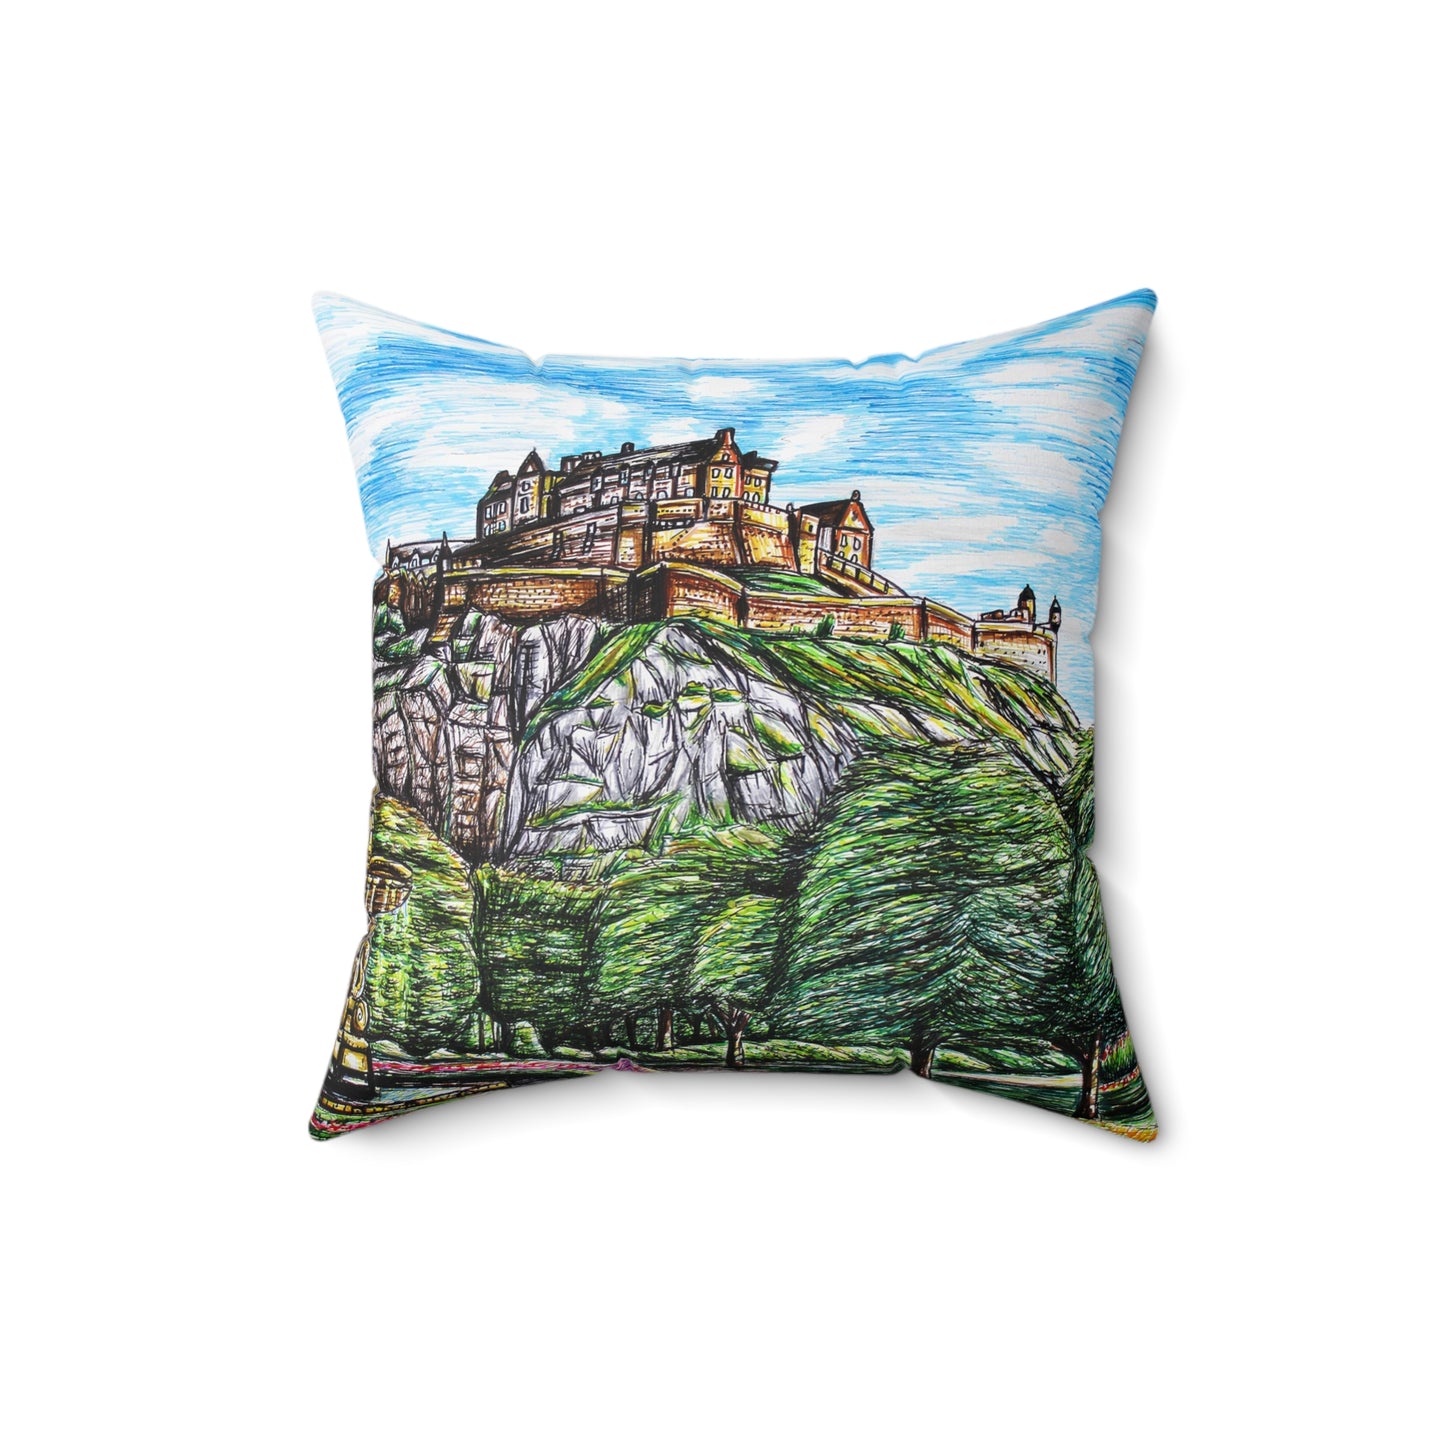 Indoor decorative Cushion- Edinburgh Castle